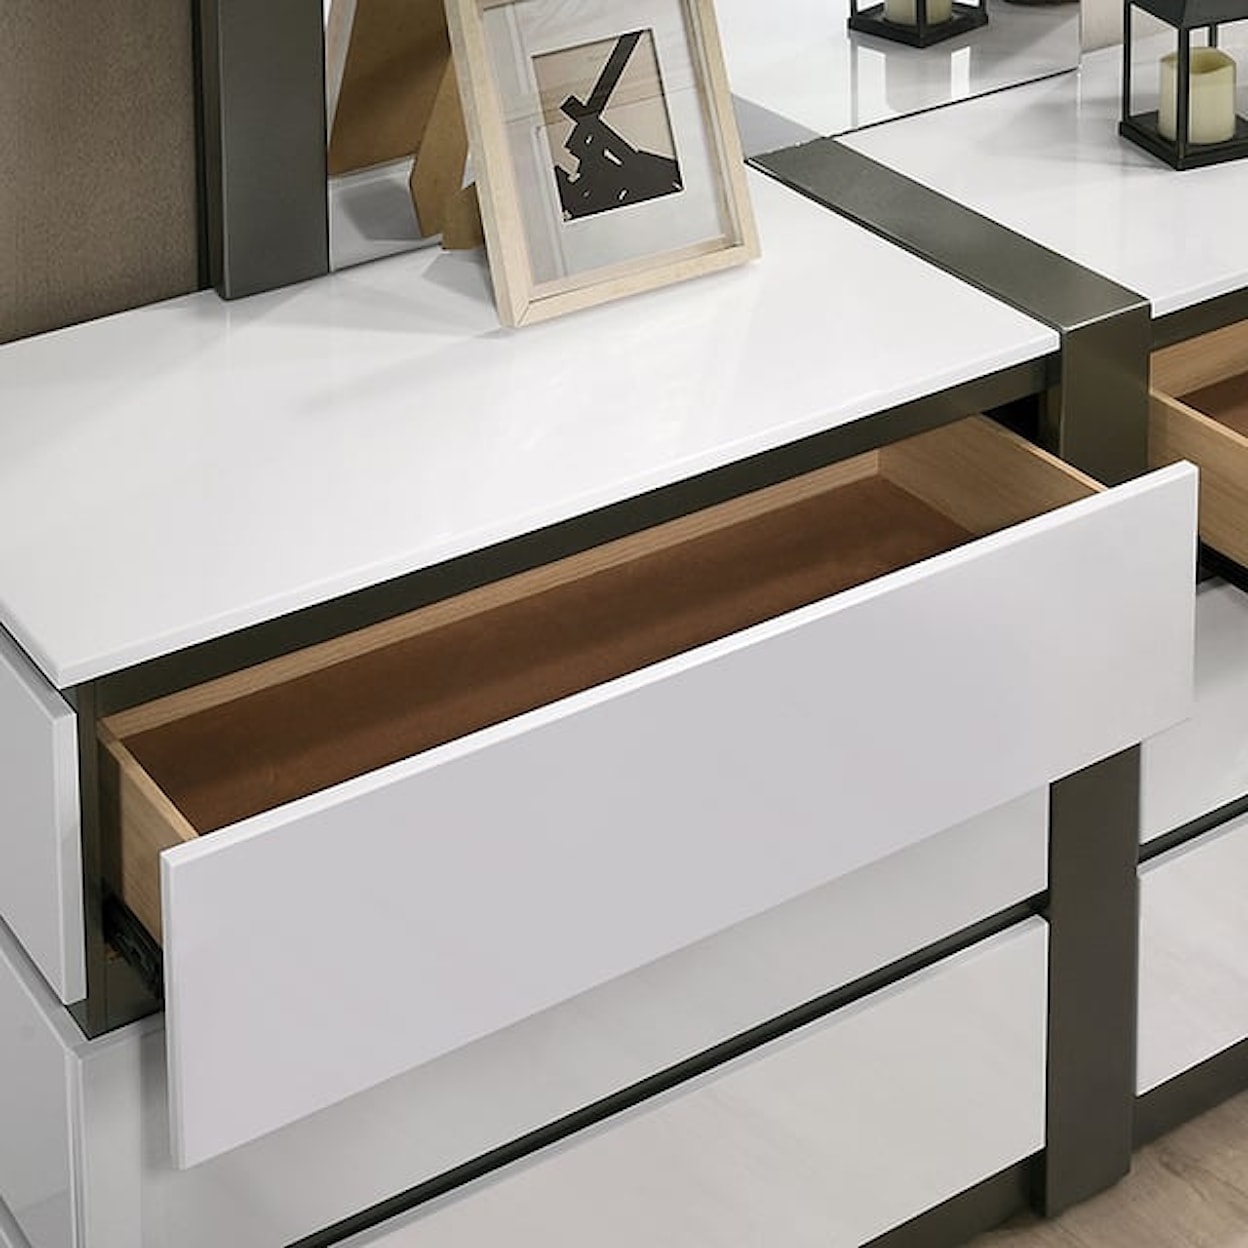 Furniture of America Birsfelden 6-Drawer Dresser